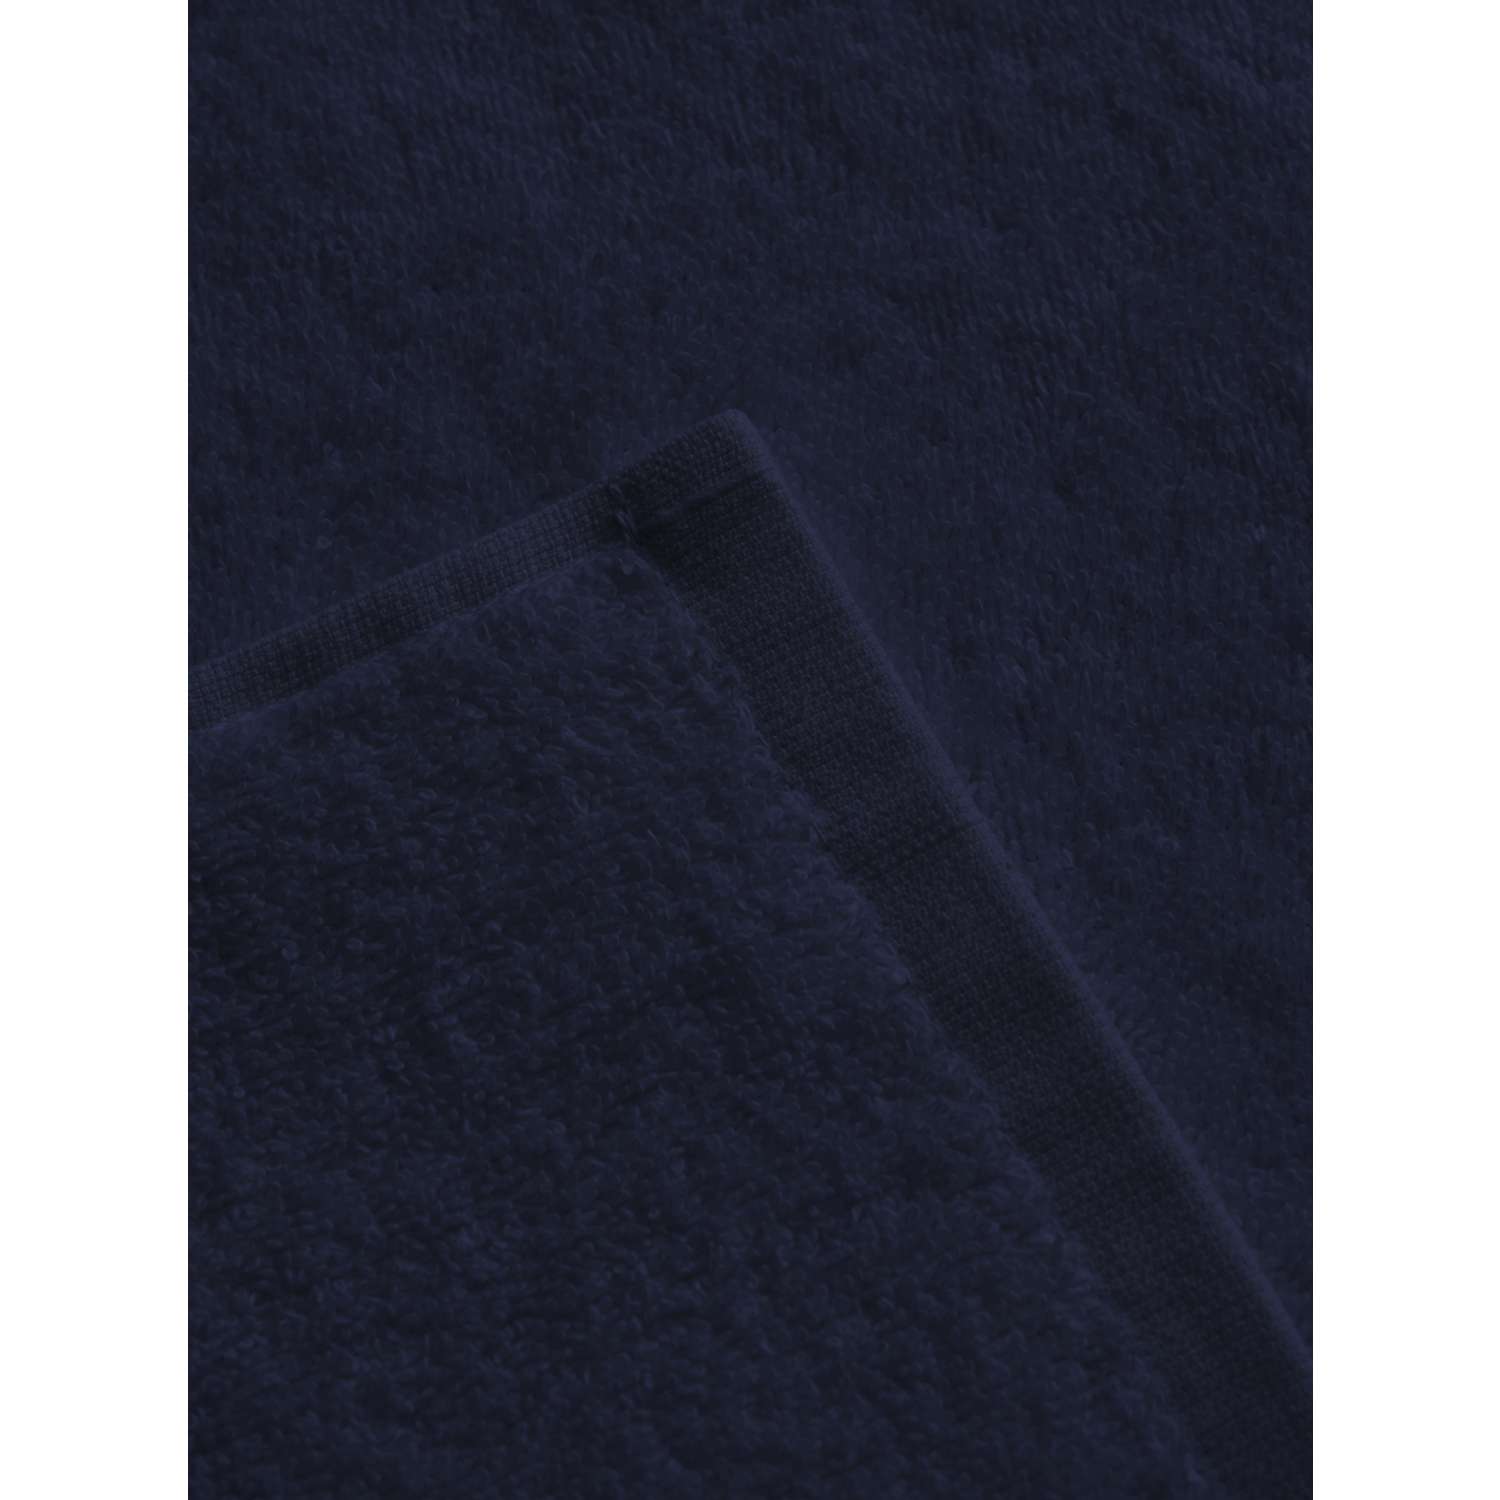 Полотенце Frutto Rosso Банное махровое синий 30*50 - фото 10